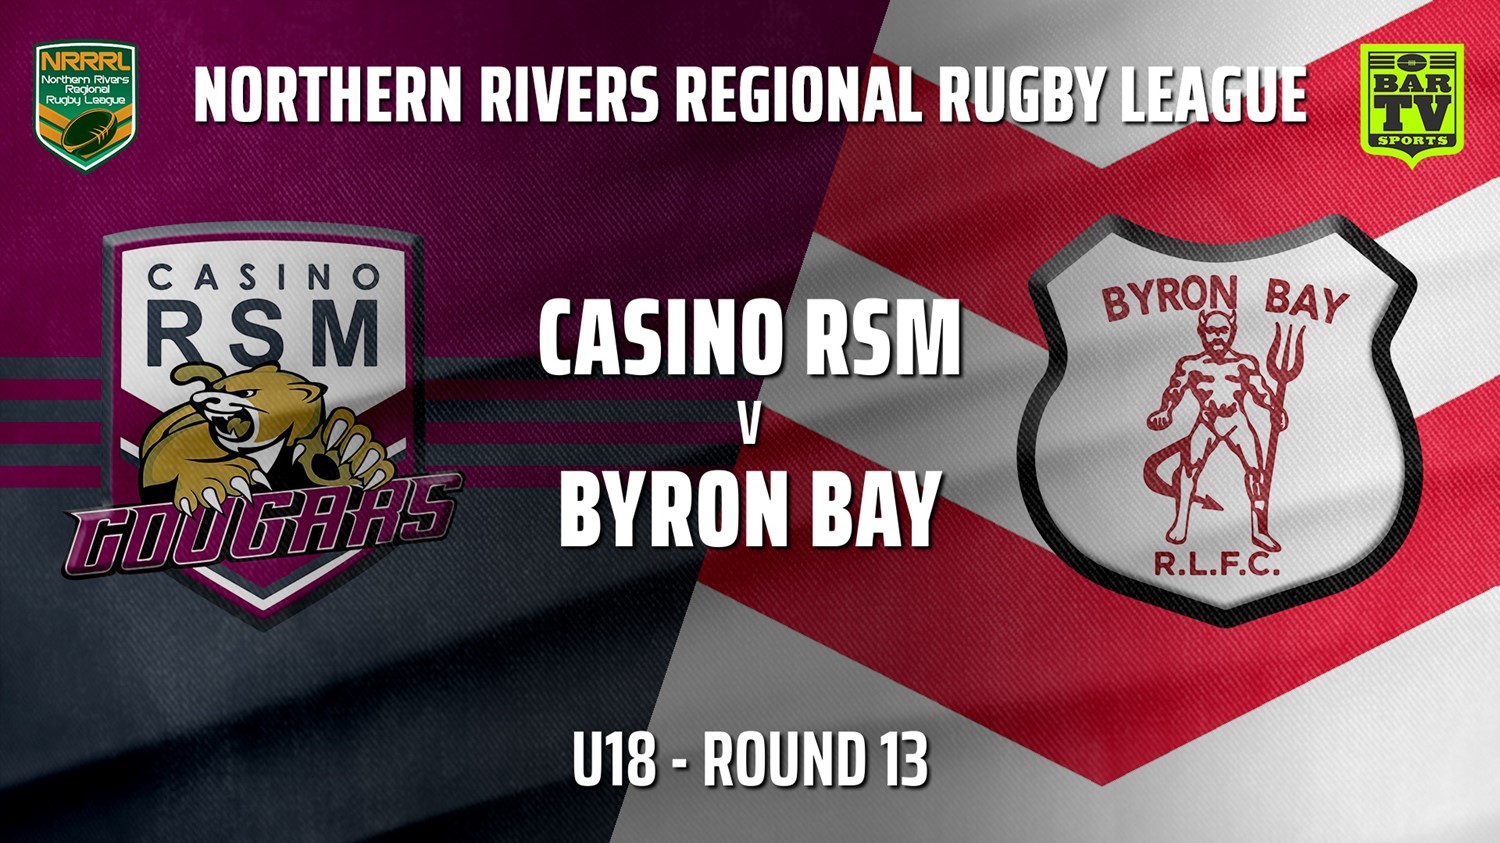 210801-Northern Rivers Round 13 - U18 - Casino RSM Cougars v Byron Bay Red Devils Slate Image